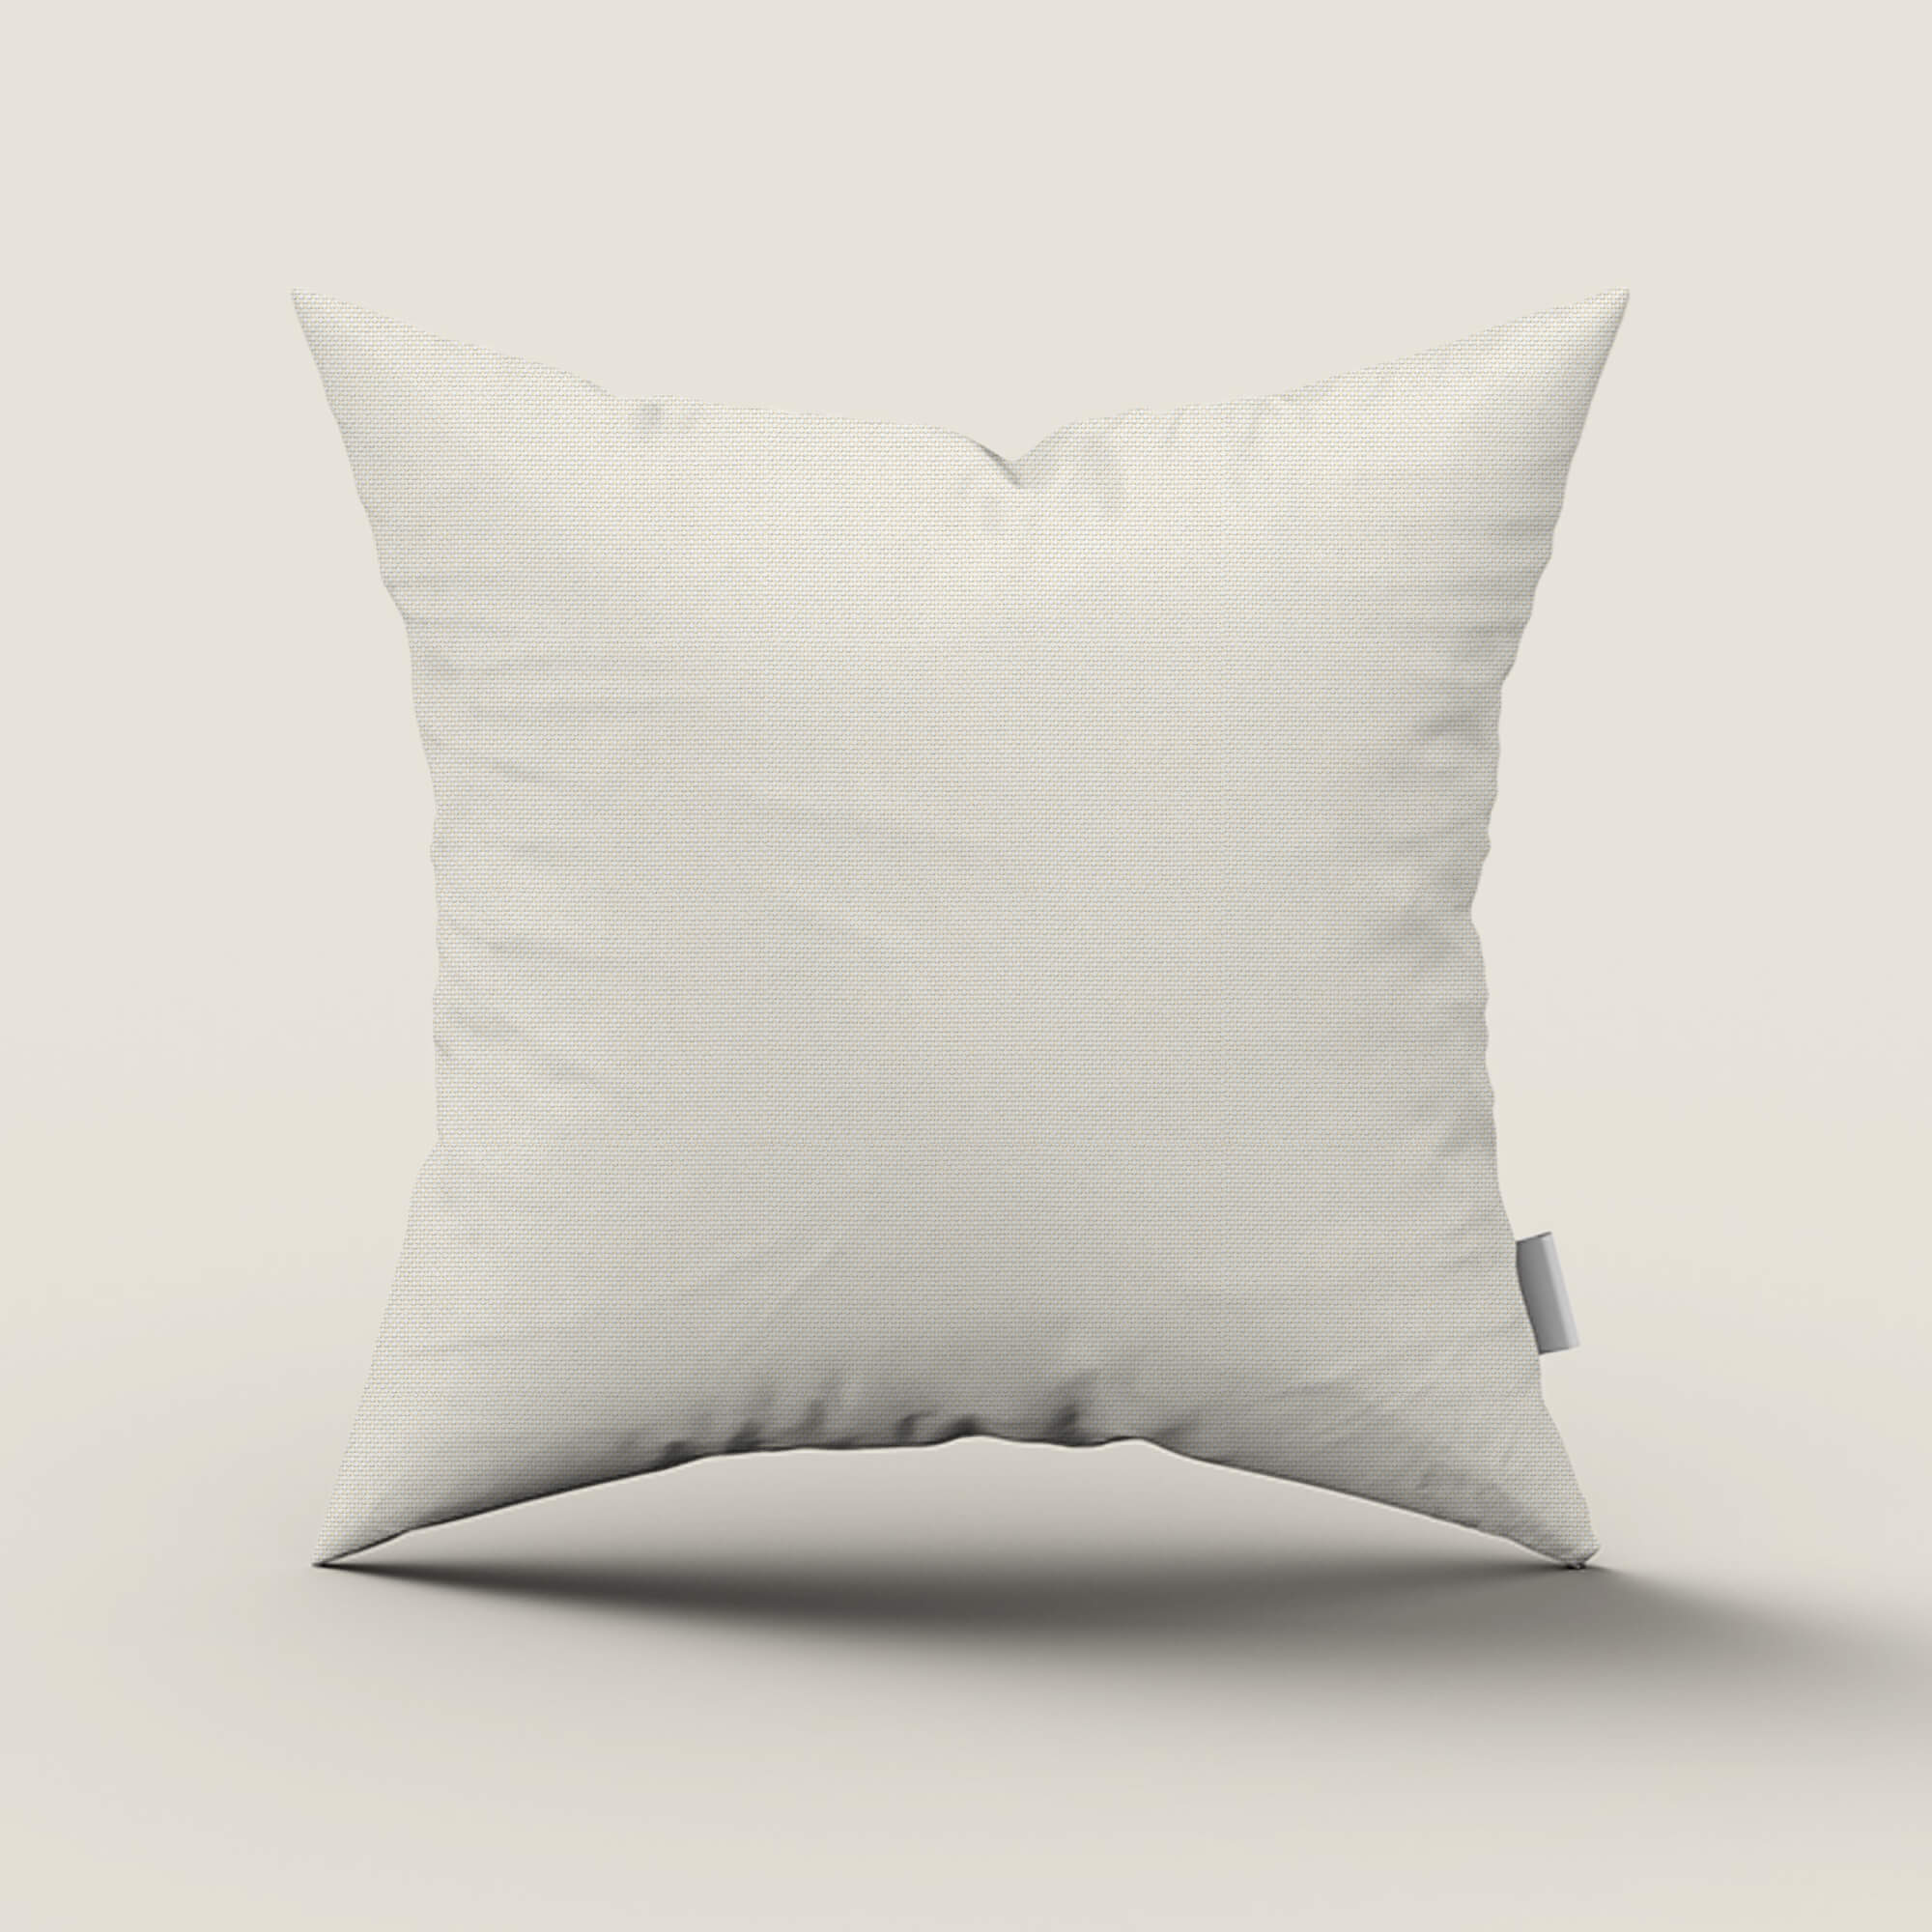 PENGI Waterproof Outdoor Pillow Case 1 Pcs - Sailcloth Star White